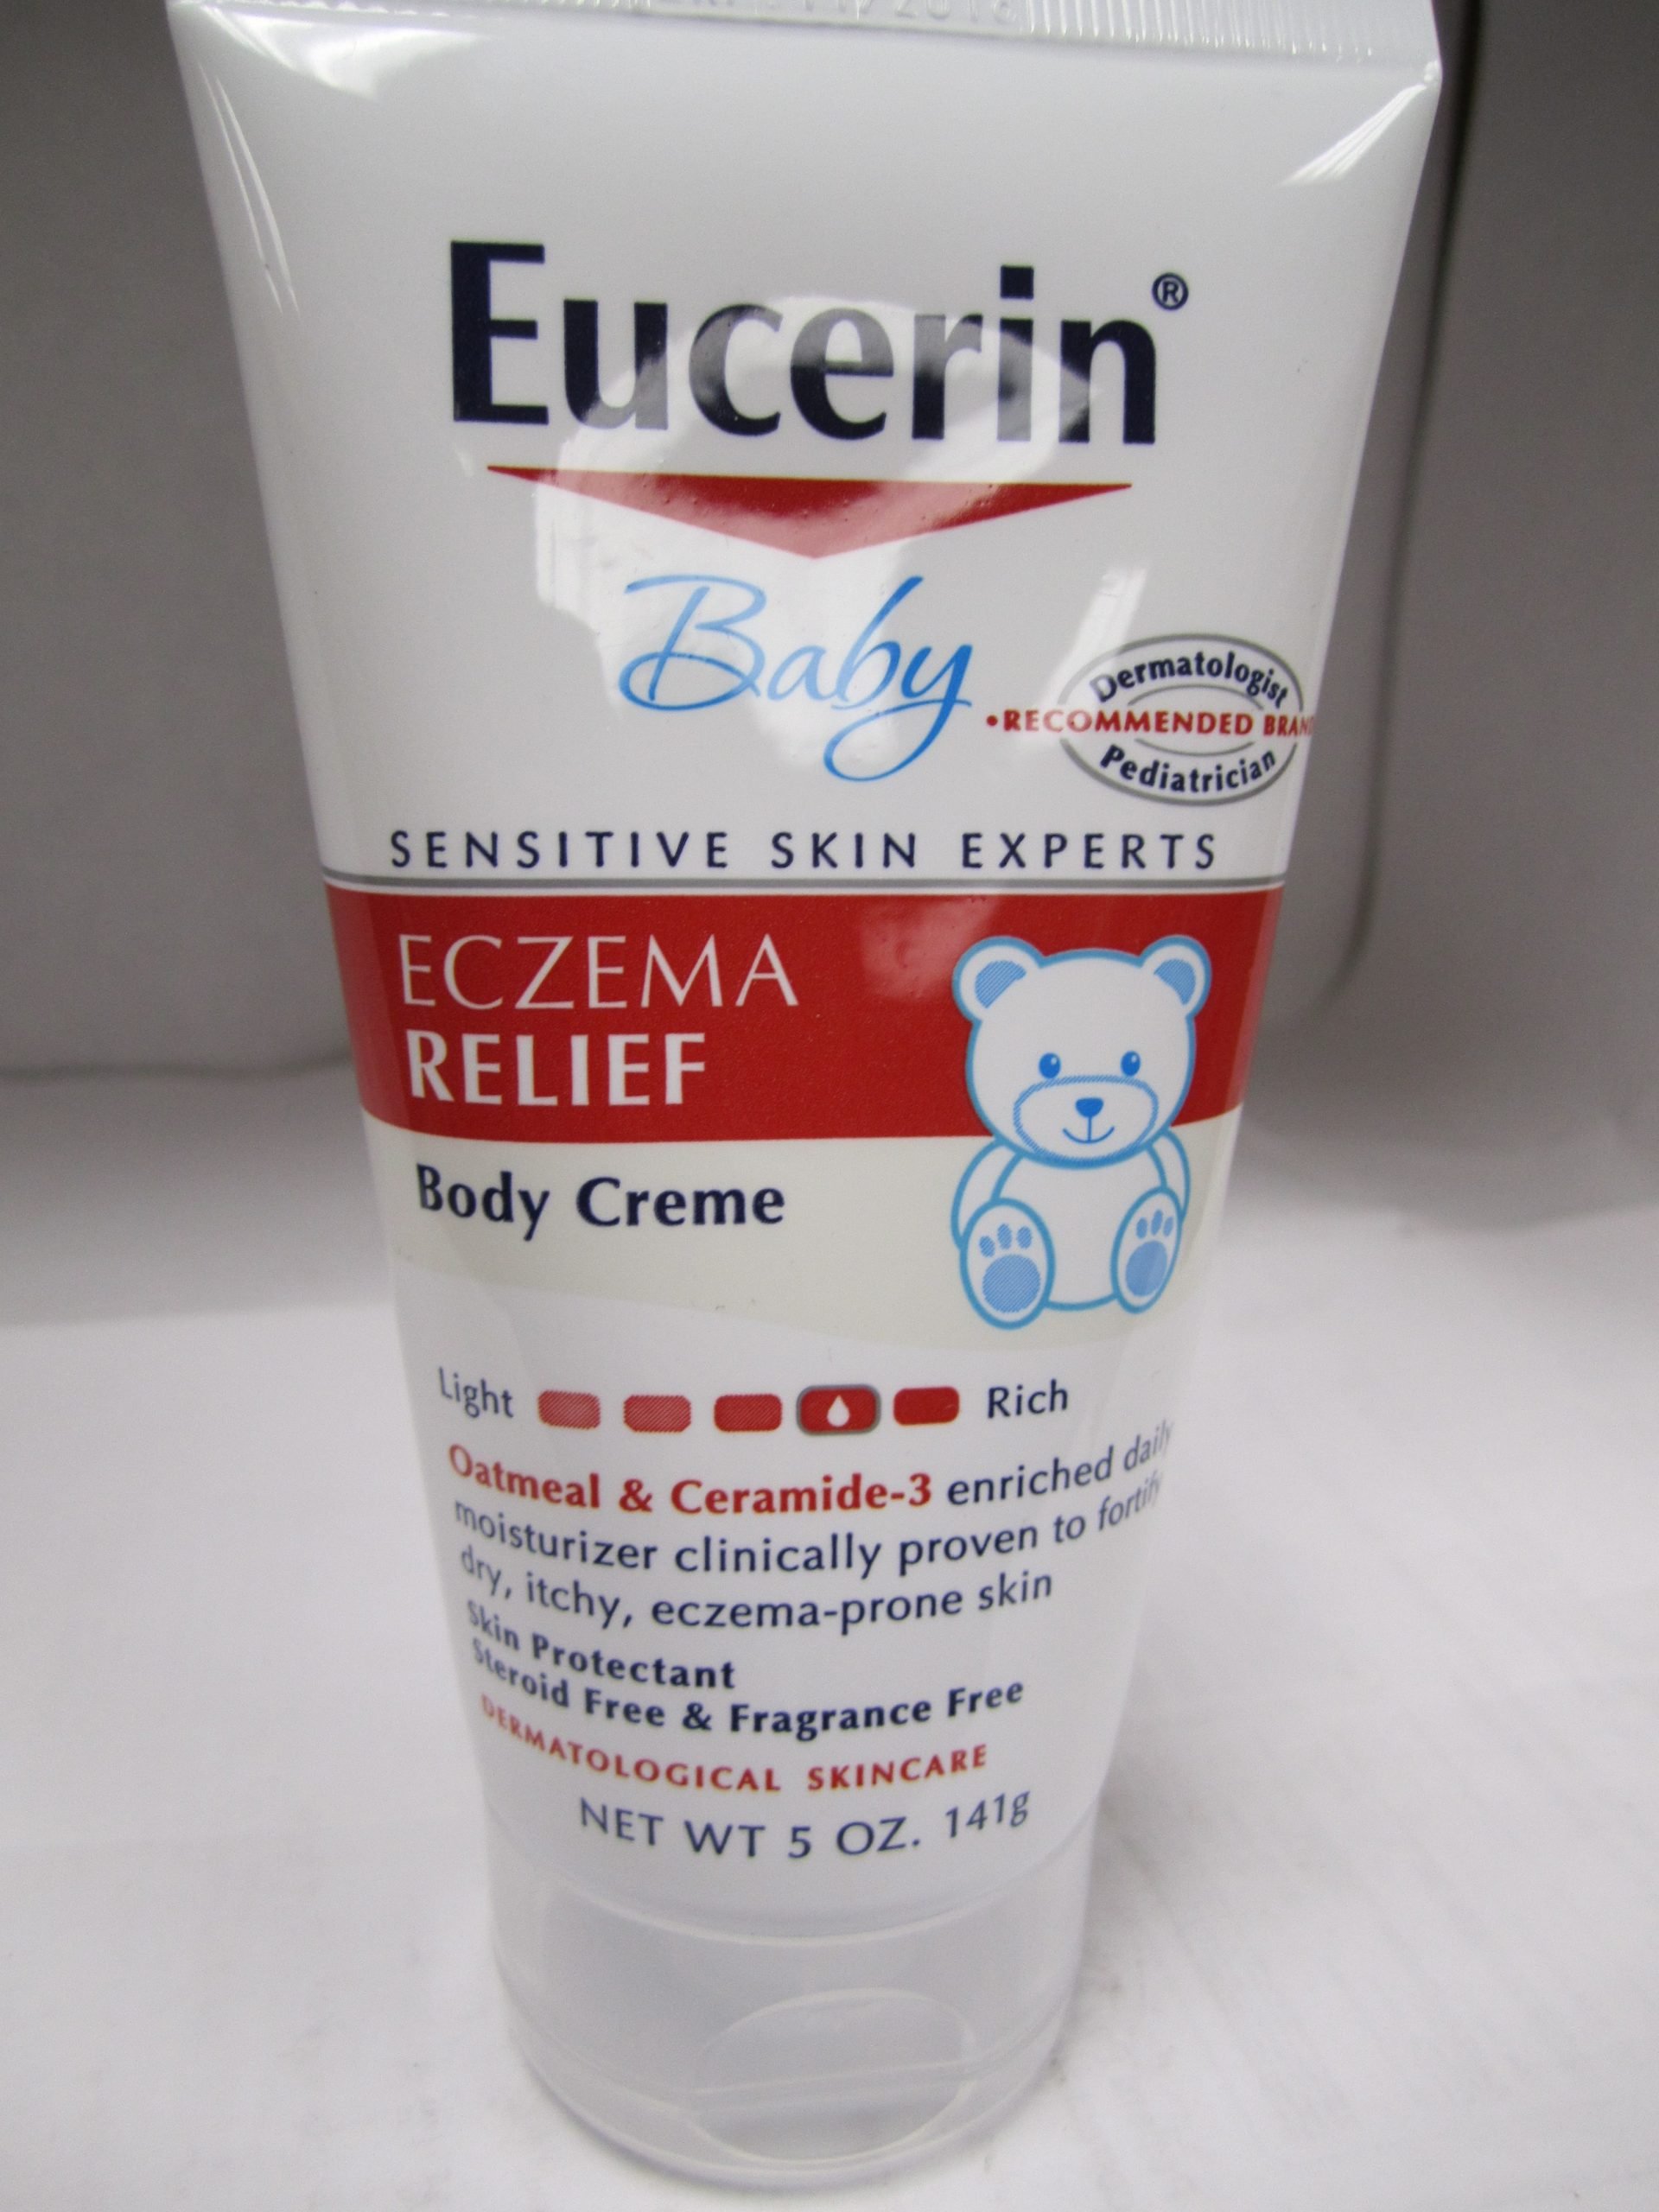 Baby eczema cream